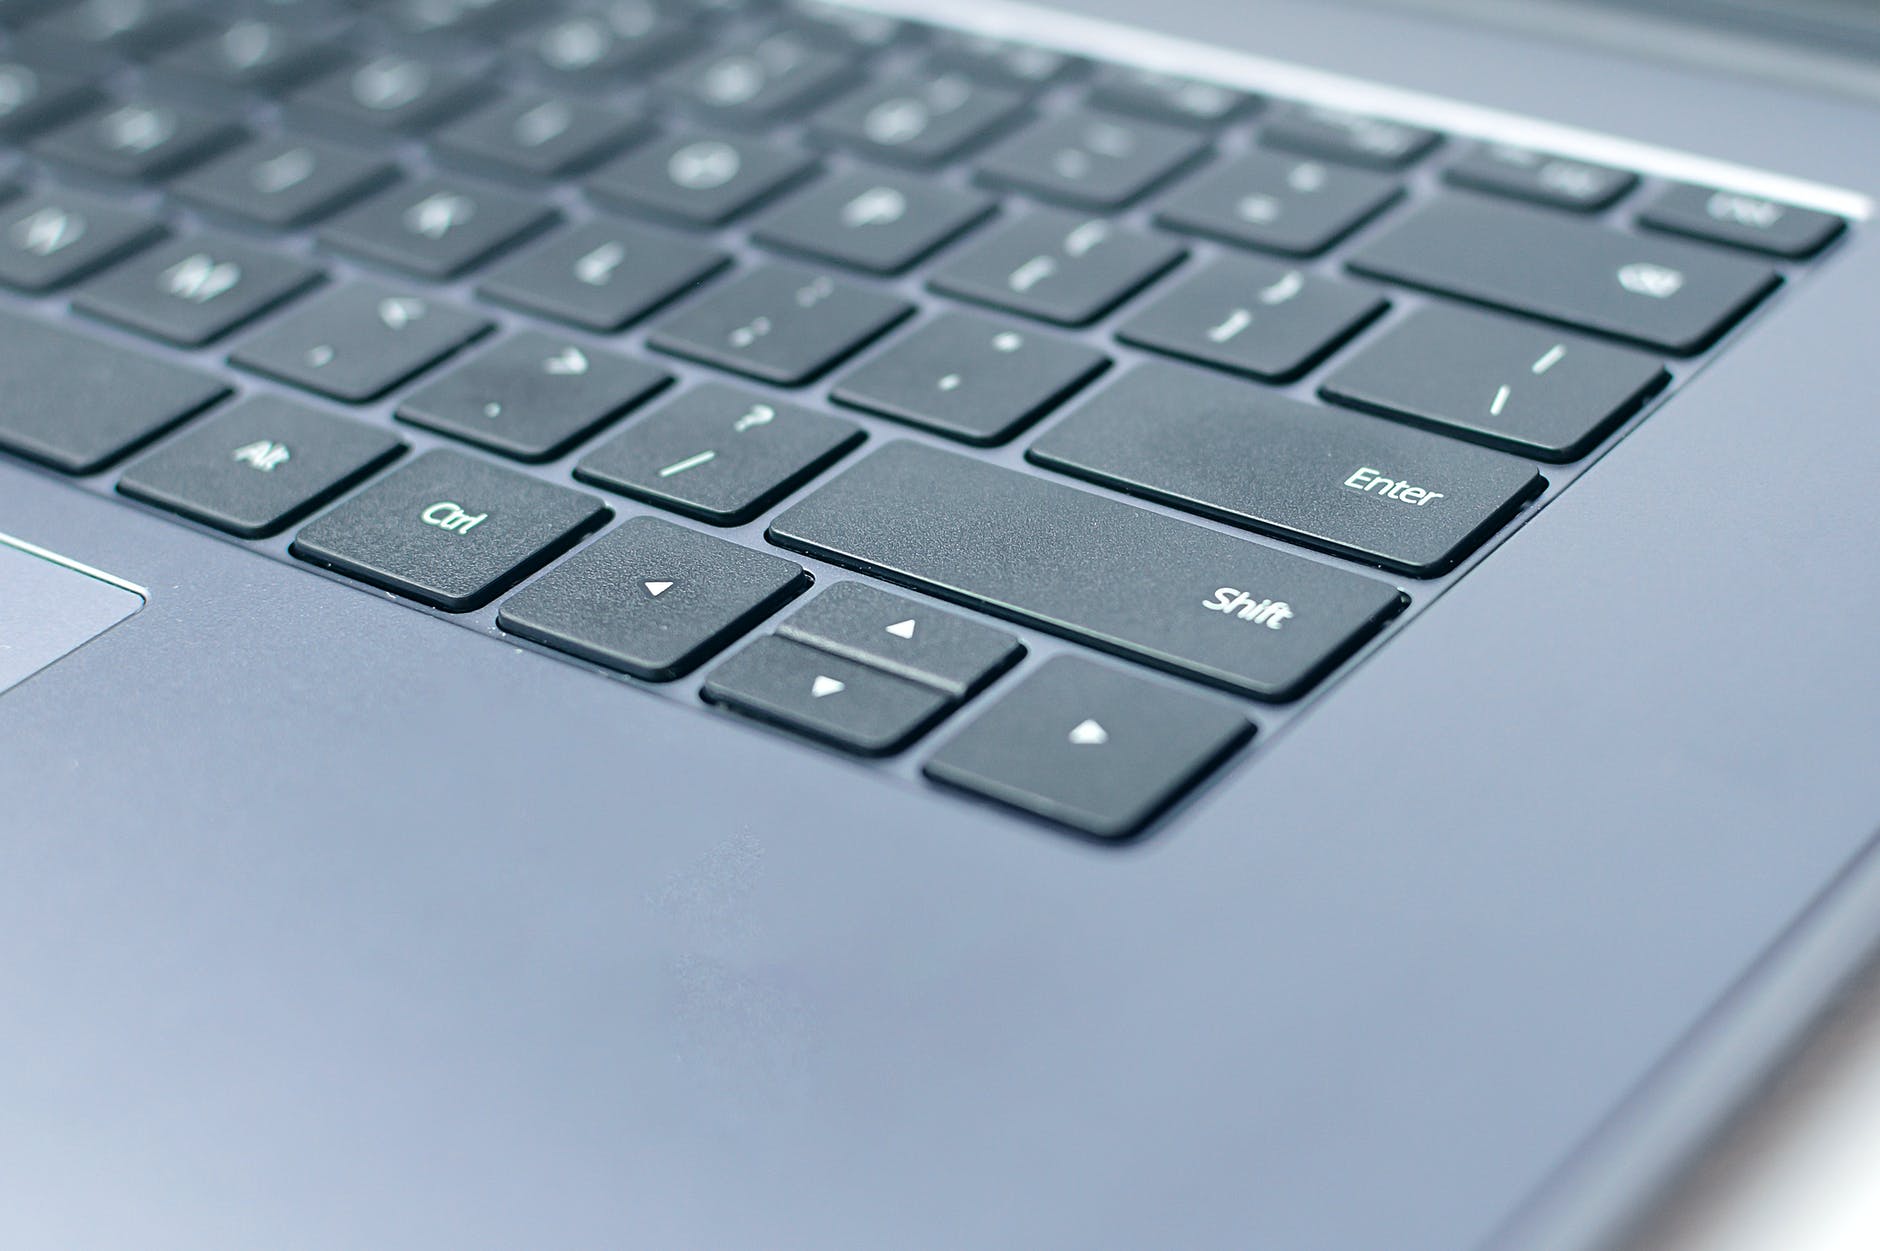 modern laptop keyboard with symbols on keys